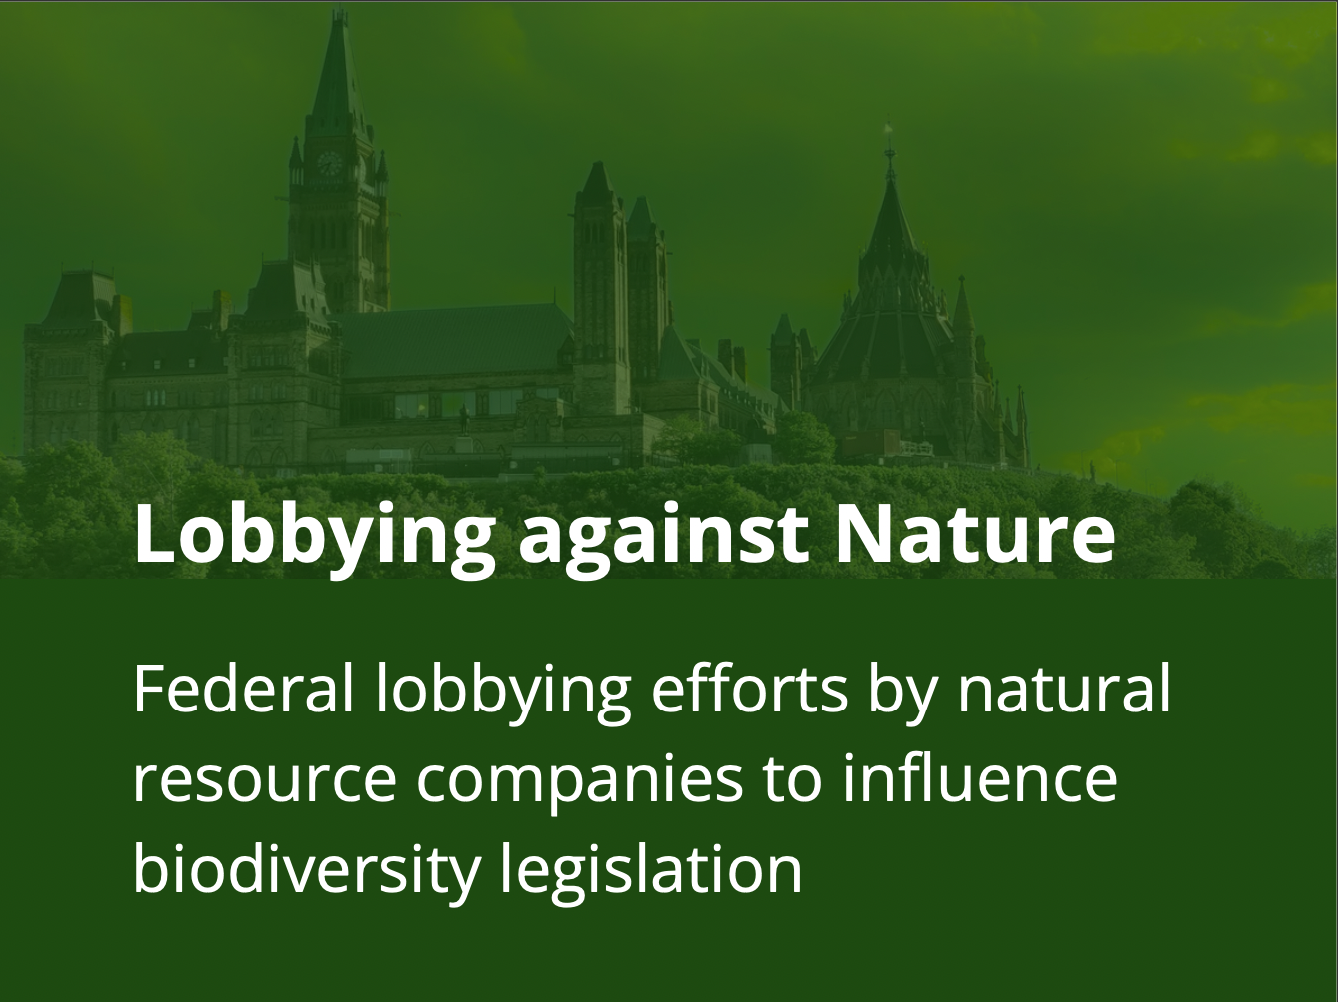 Lobbying against nature report